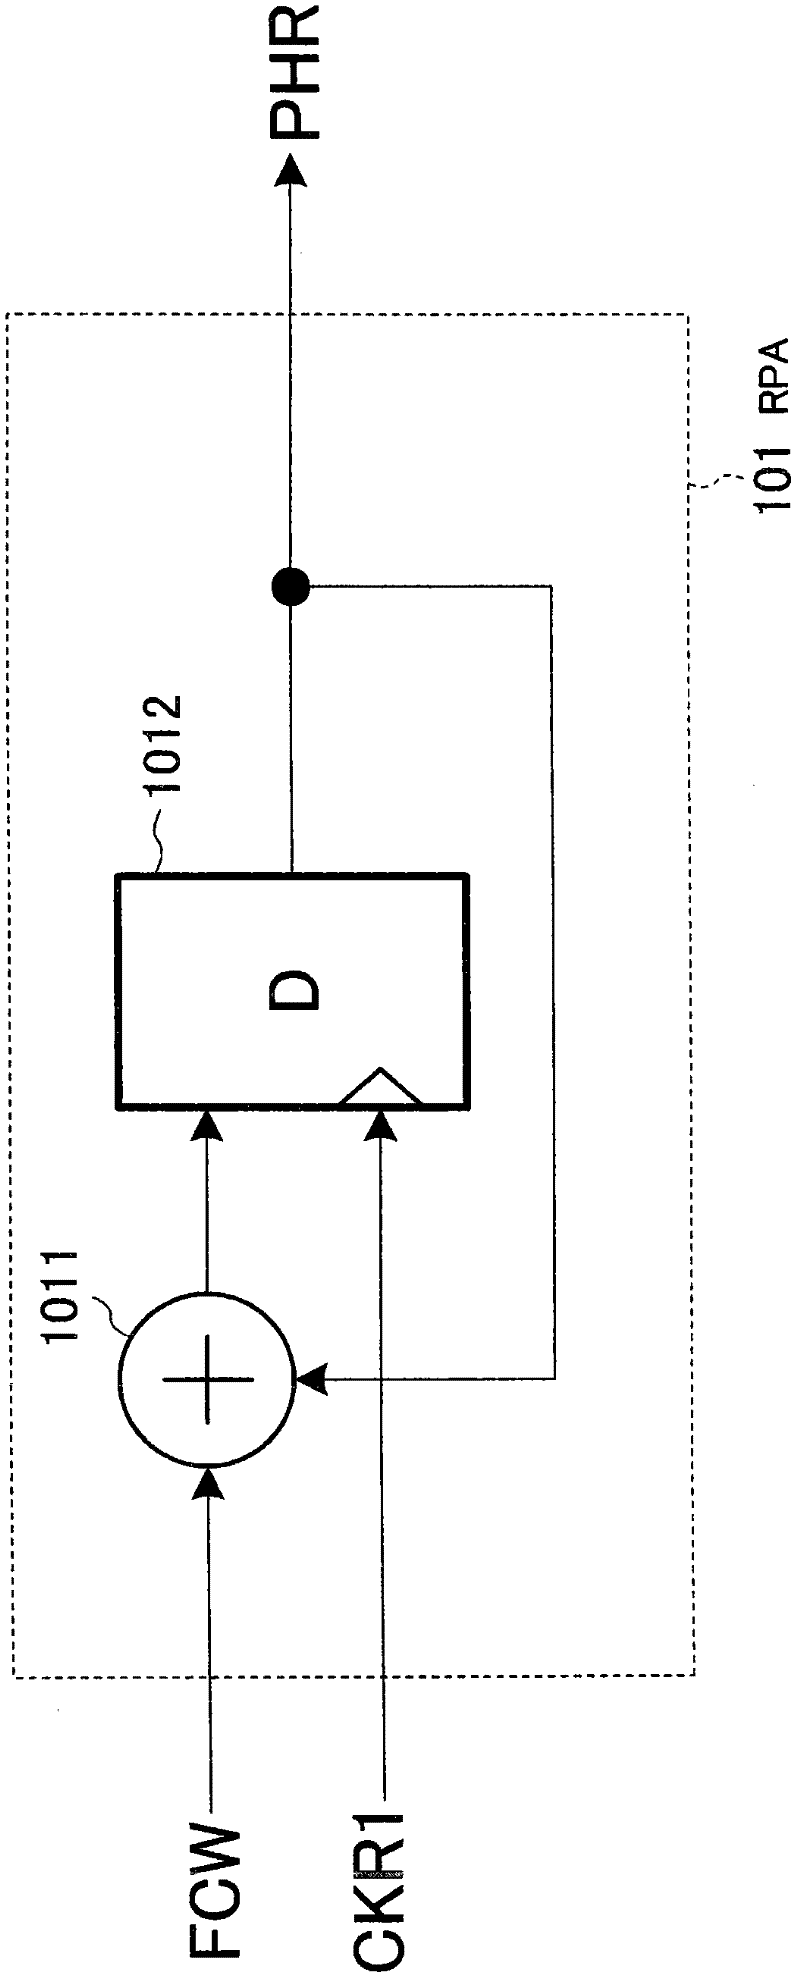 Digital pll circuit and communication apparatus